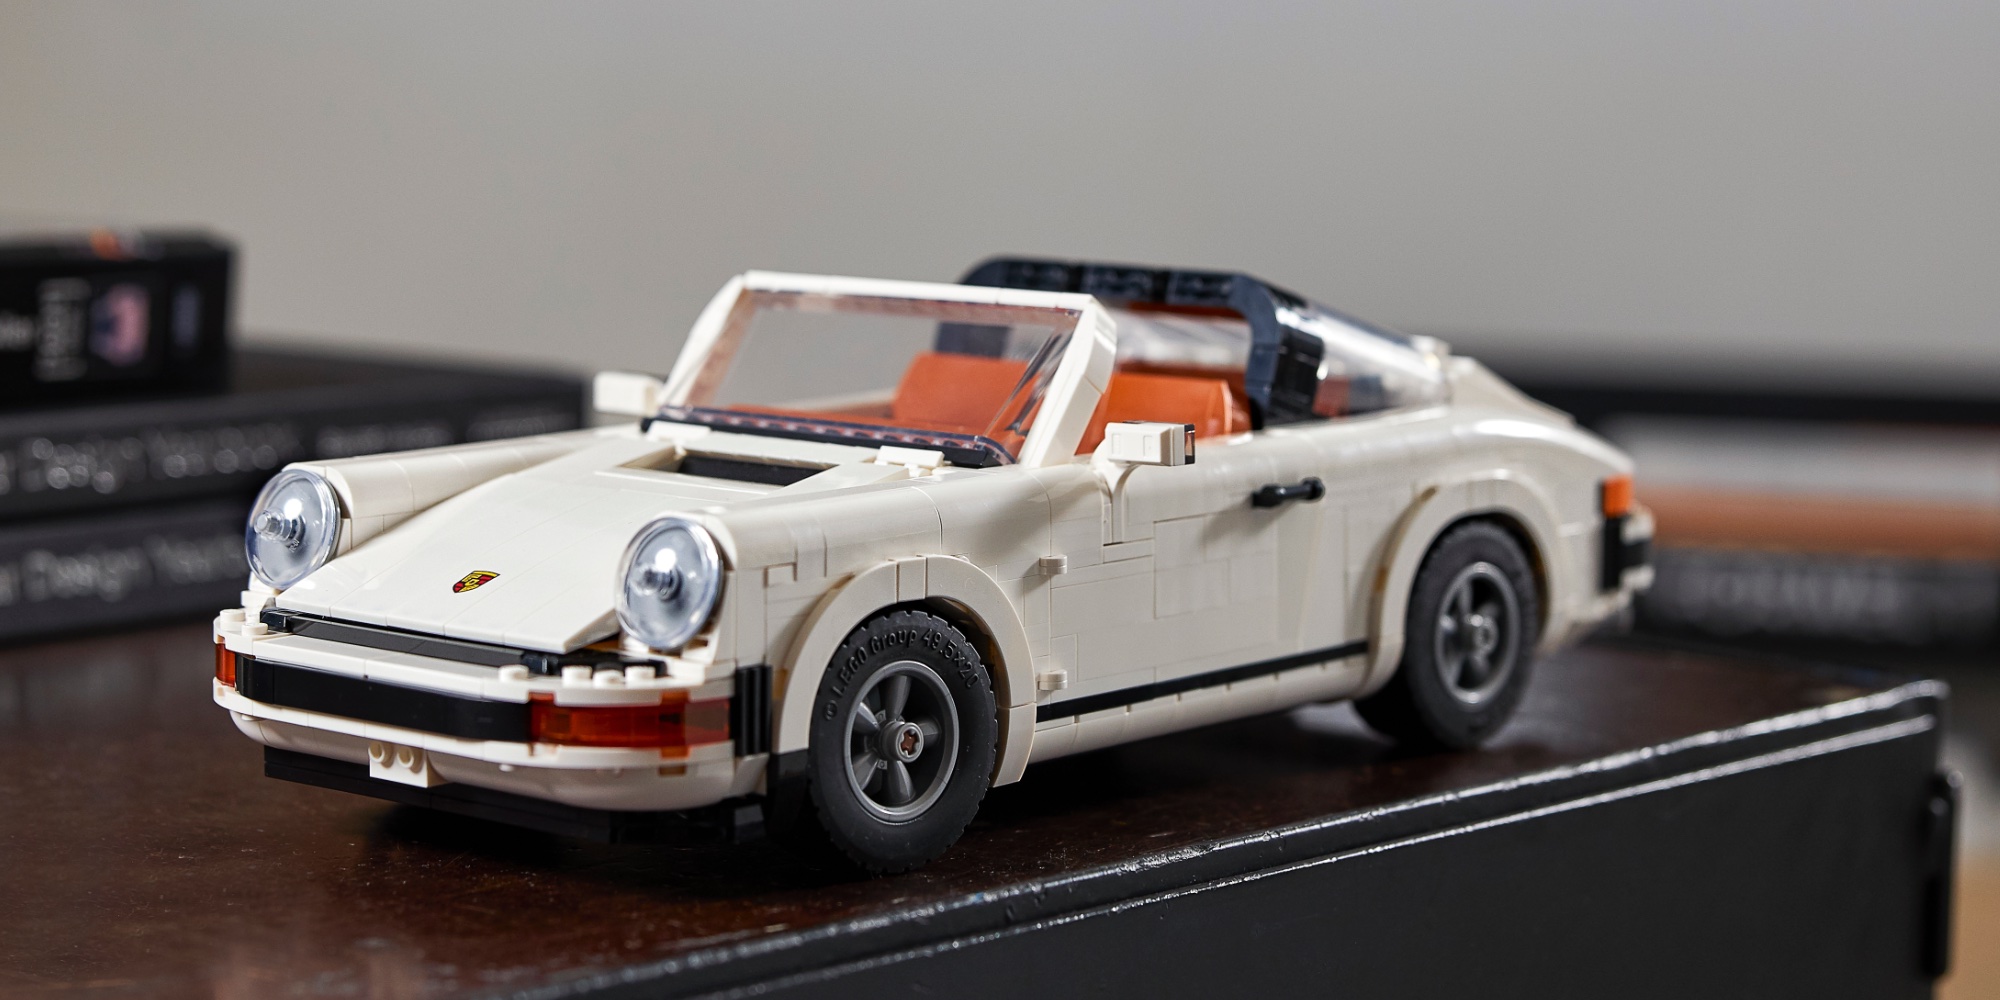 https://9to5toys.com/wp-content/uploads/sites/5/2021/01/LEGO-Porsche-911-lead.jpg